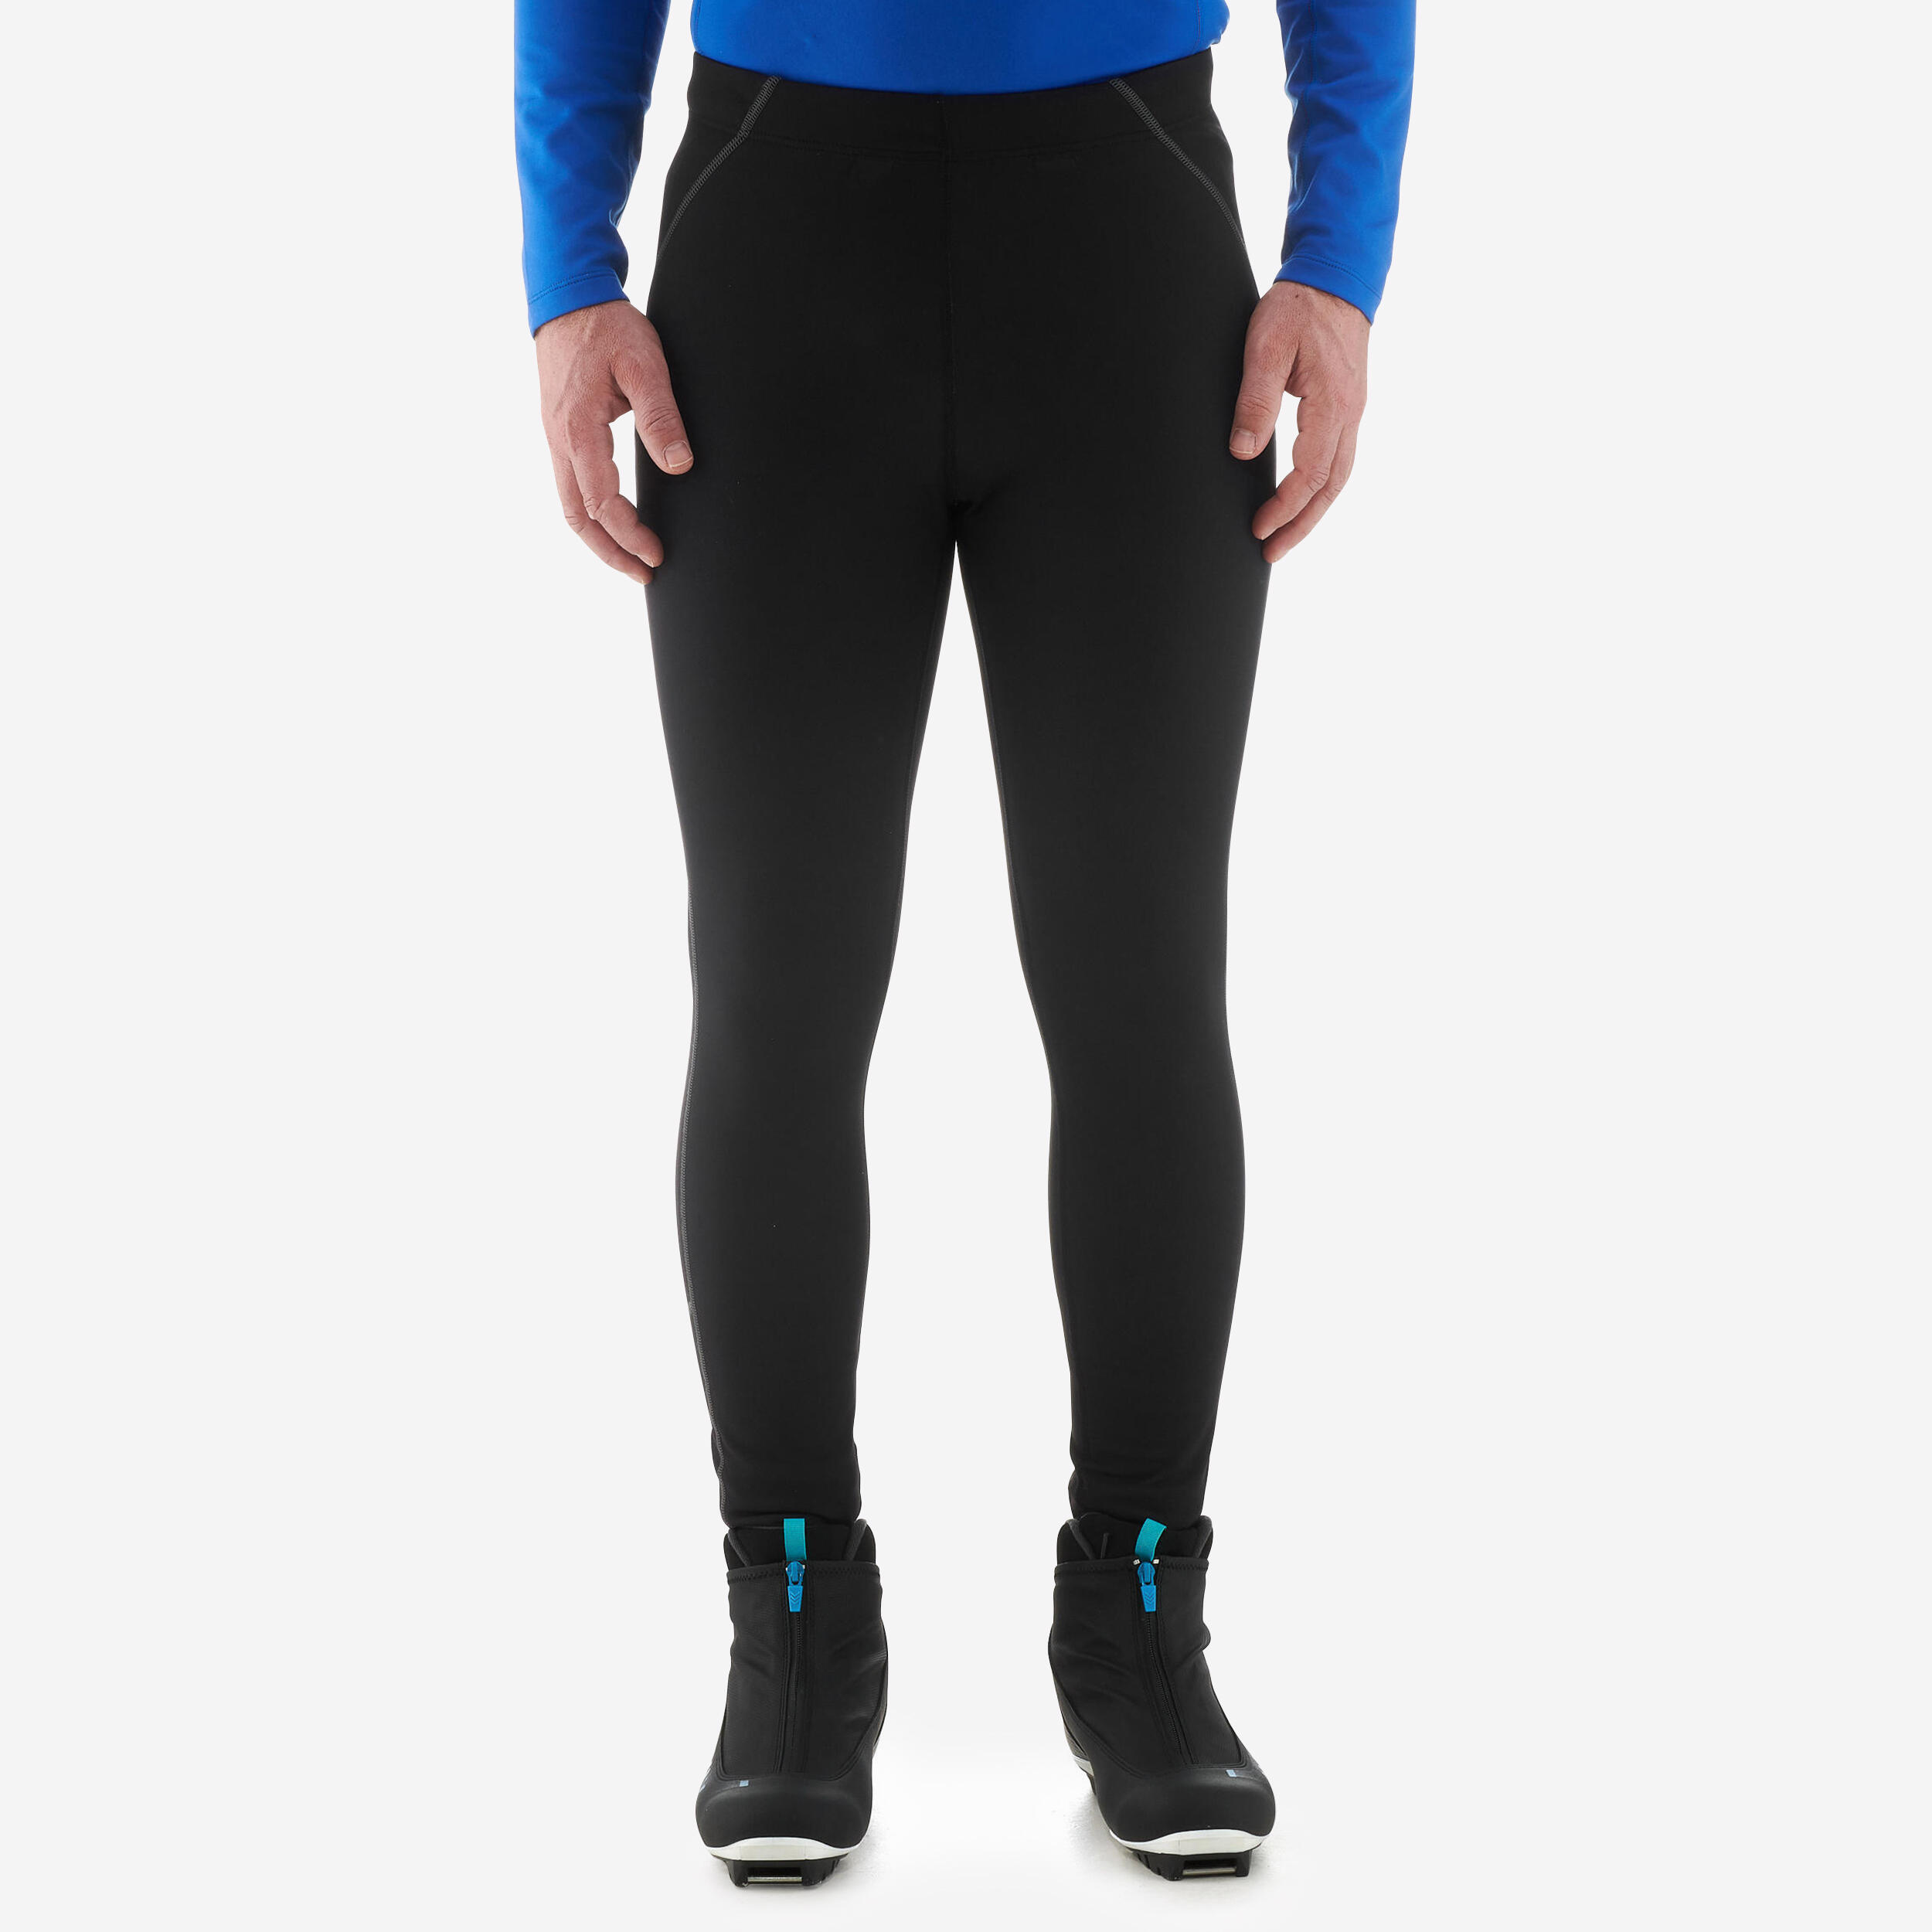 Men's Running Leggings - Warm Black/Grey - Decathlon Canada